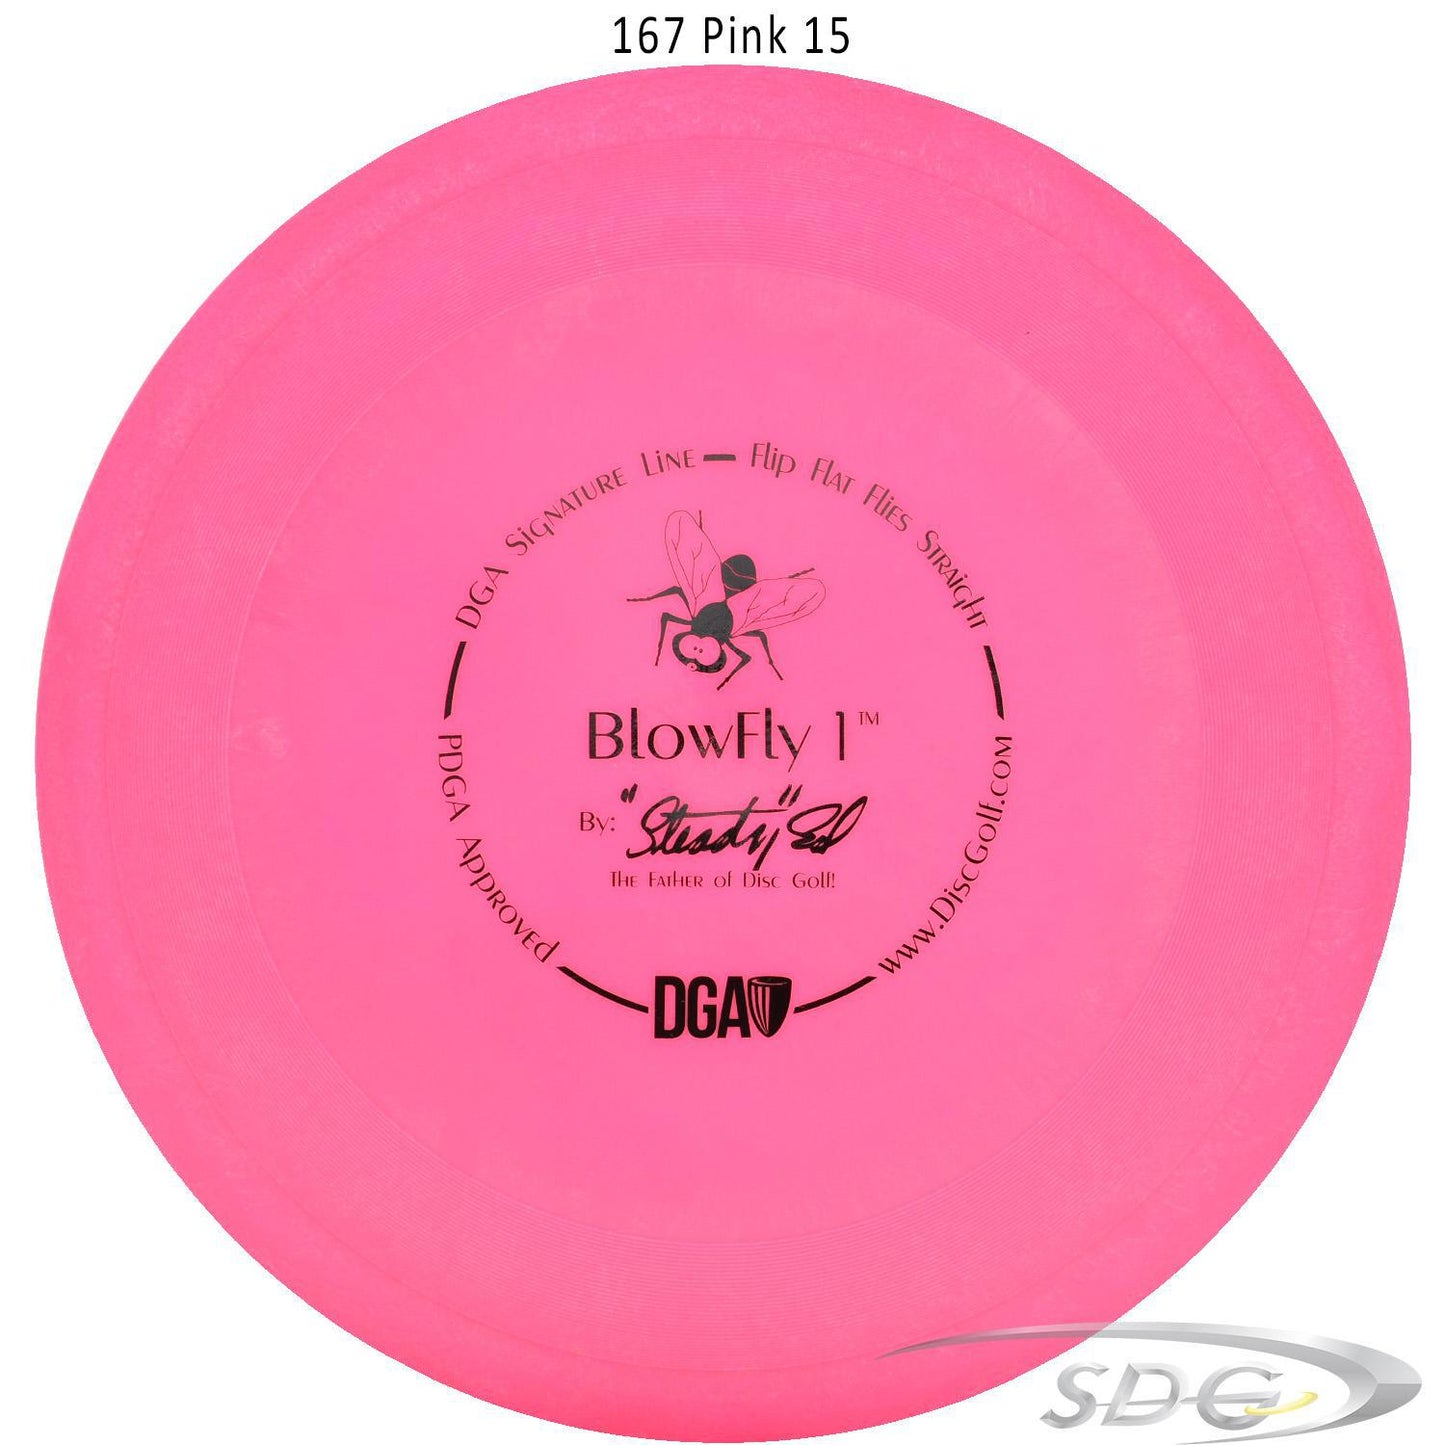 dga-signature-line-blowfly-1-disc-golf-putter 167 Pink 15 